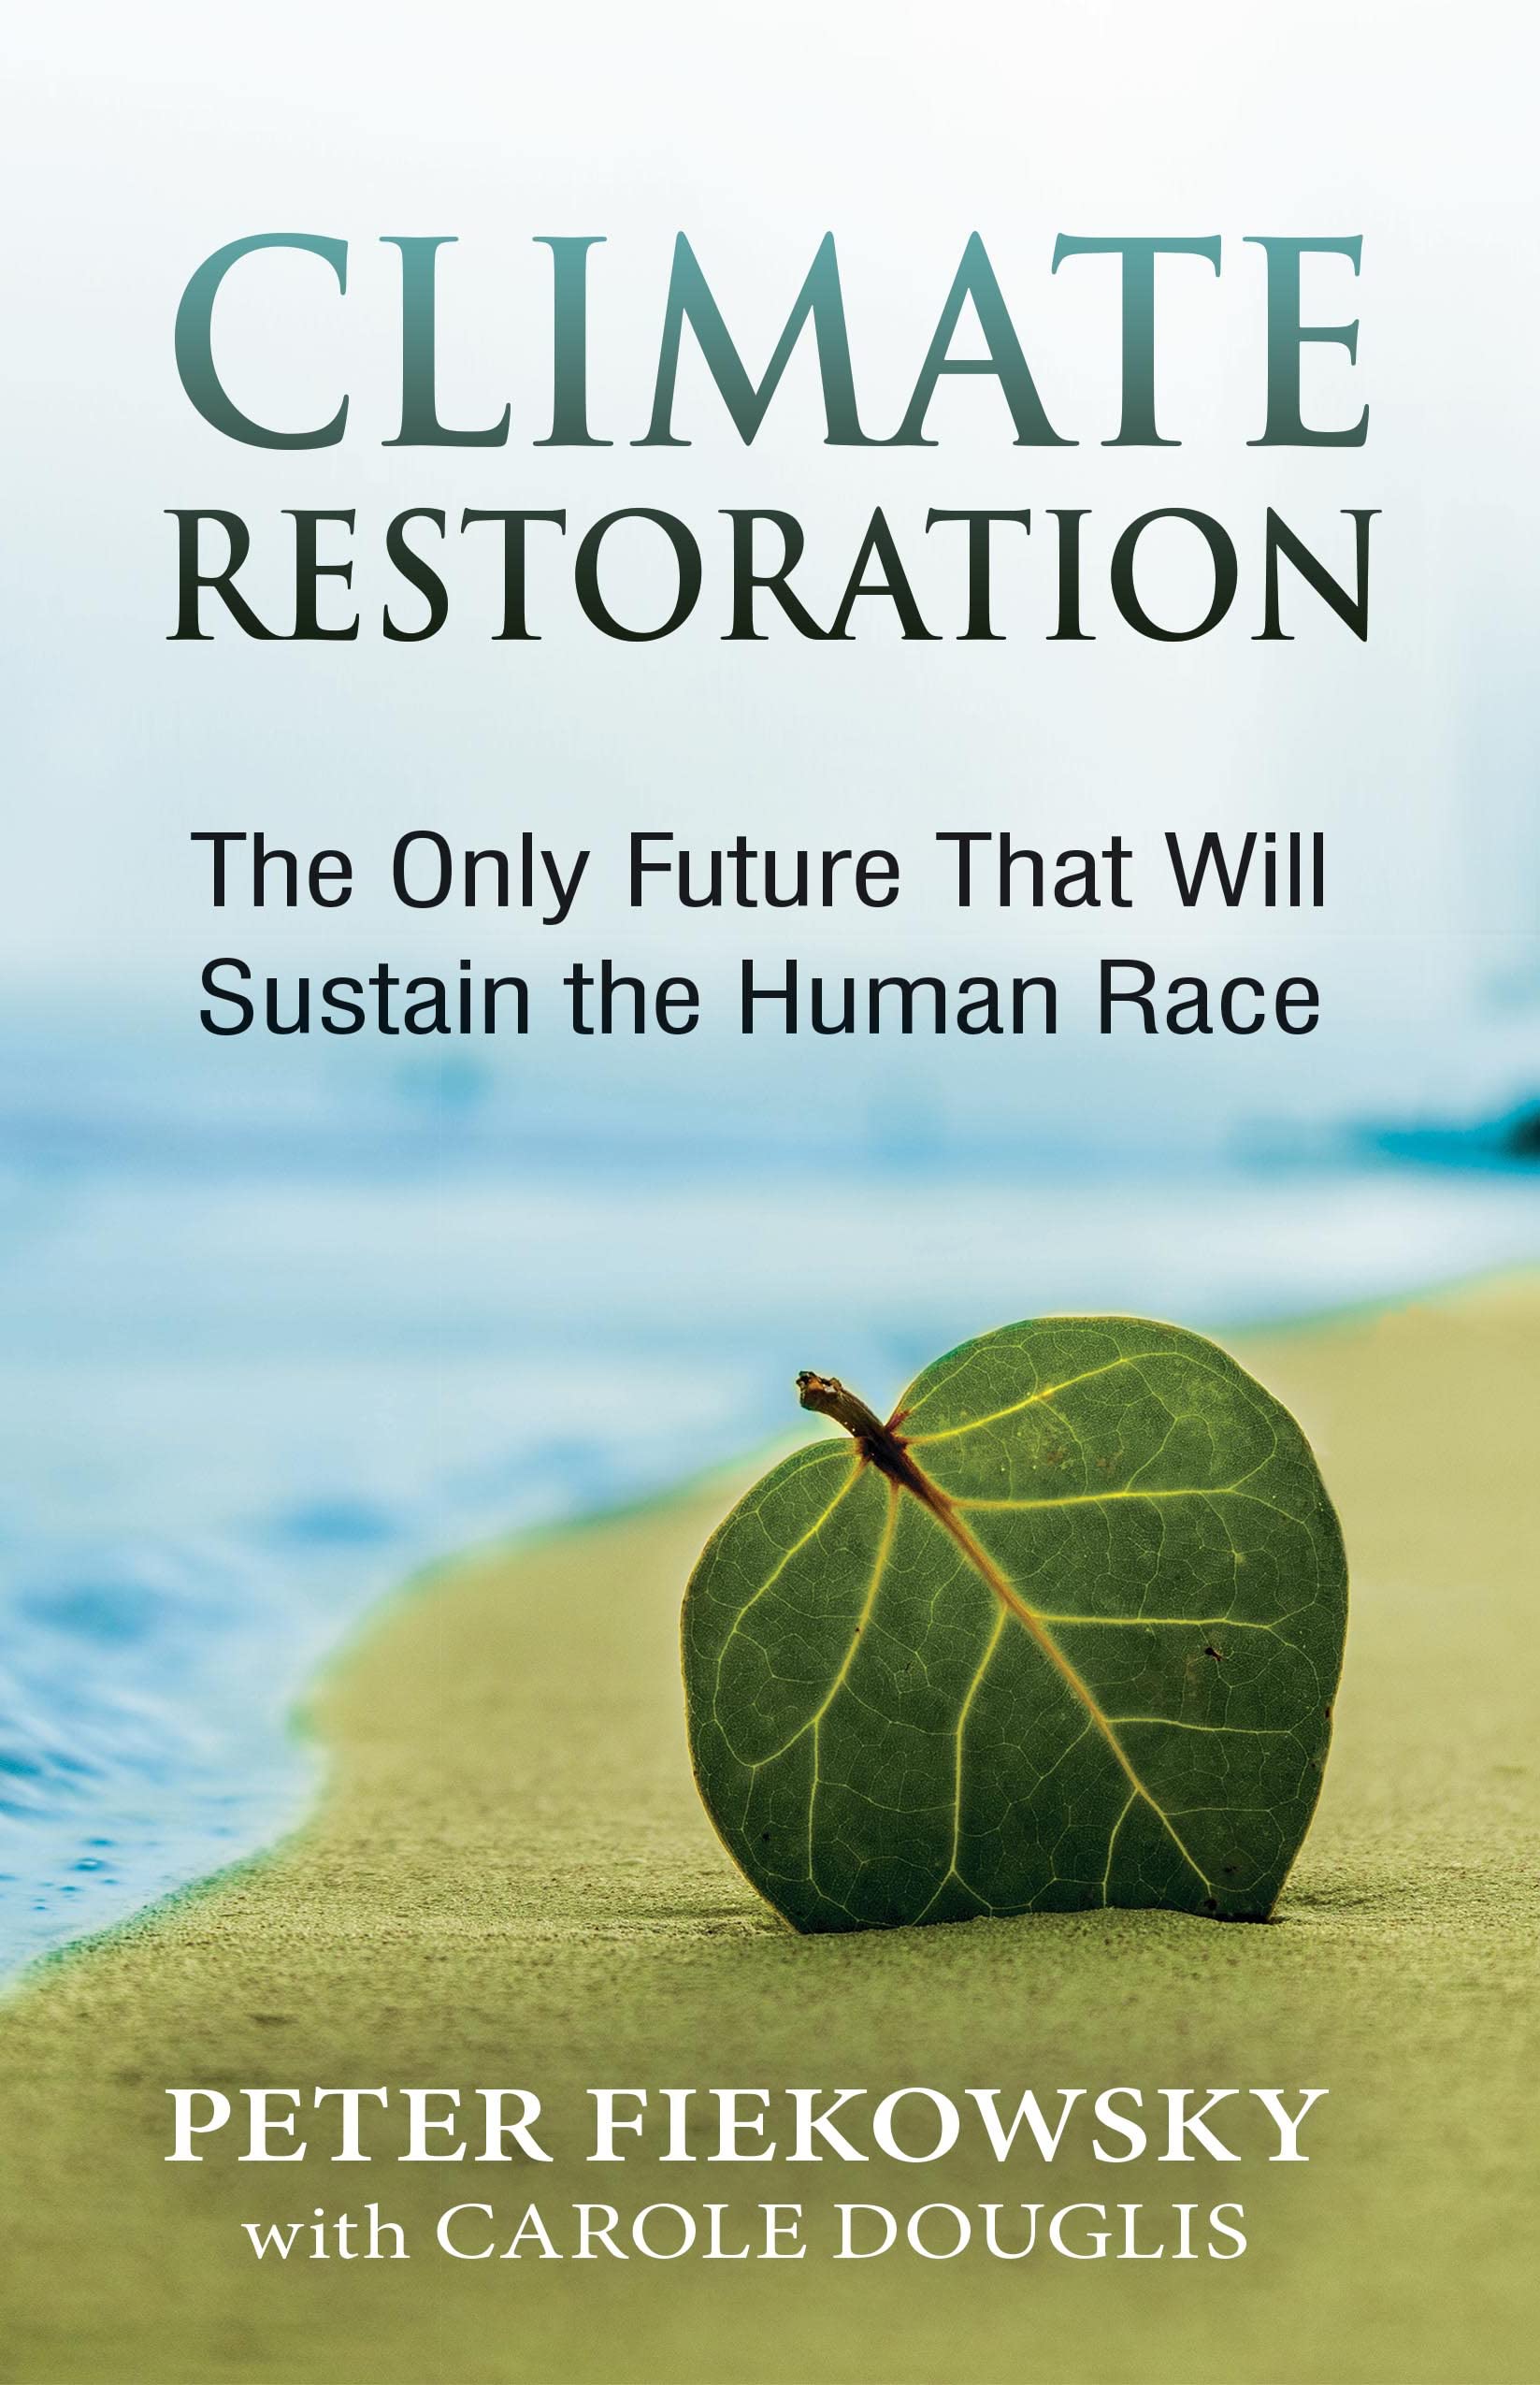 Climate restoration